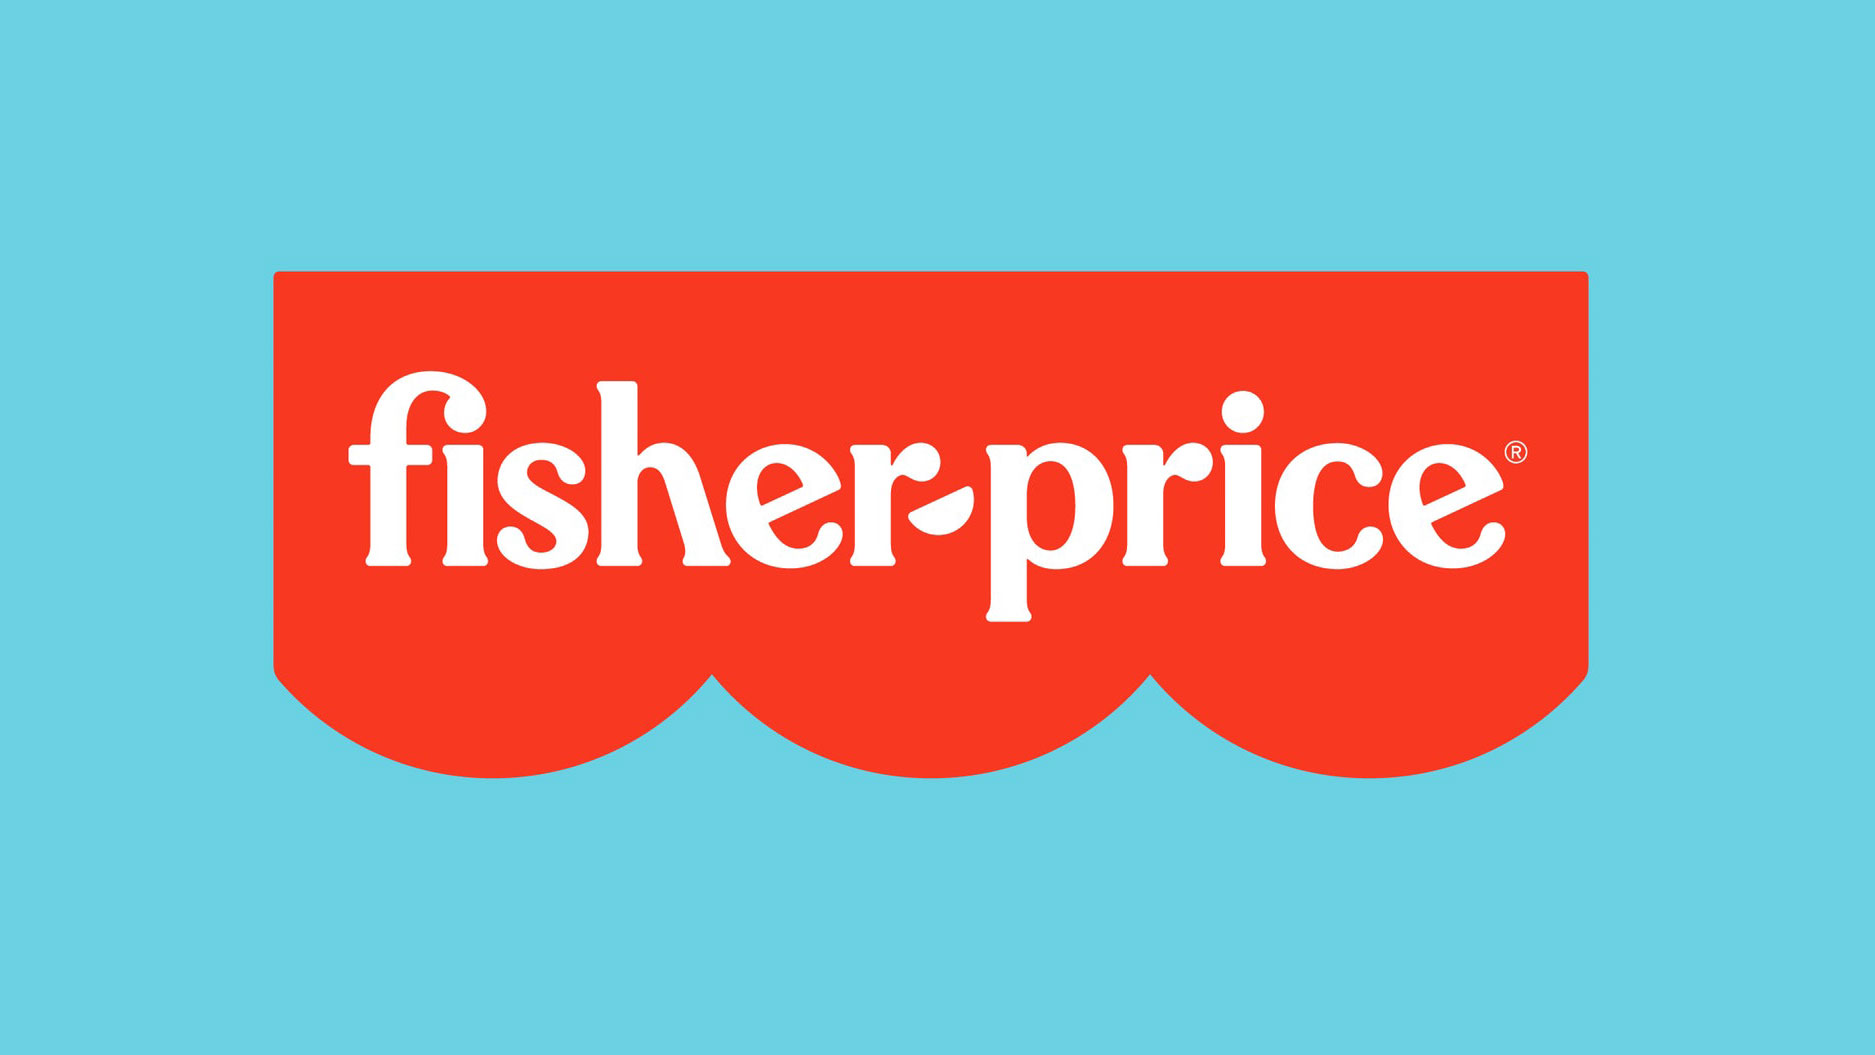 Scenario Schepsel Bridge pier Fisher-Price's new logo puts the fun back in branding | Creative Bloq